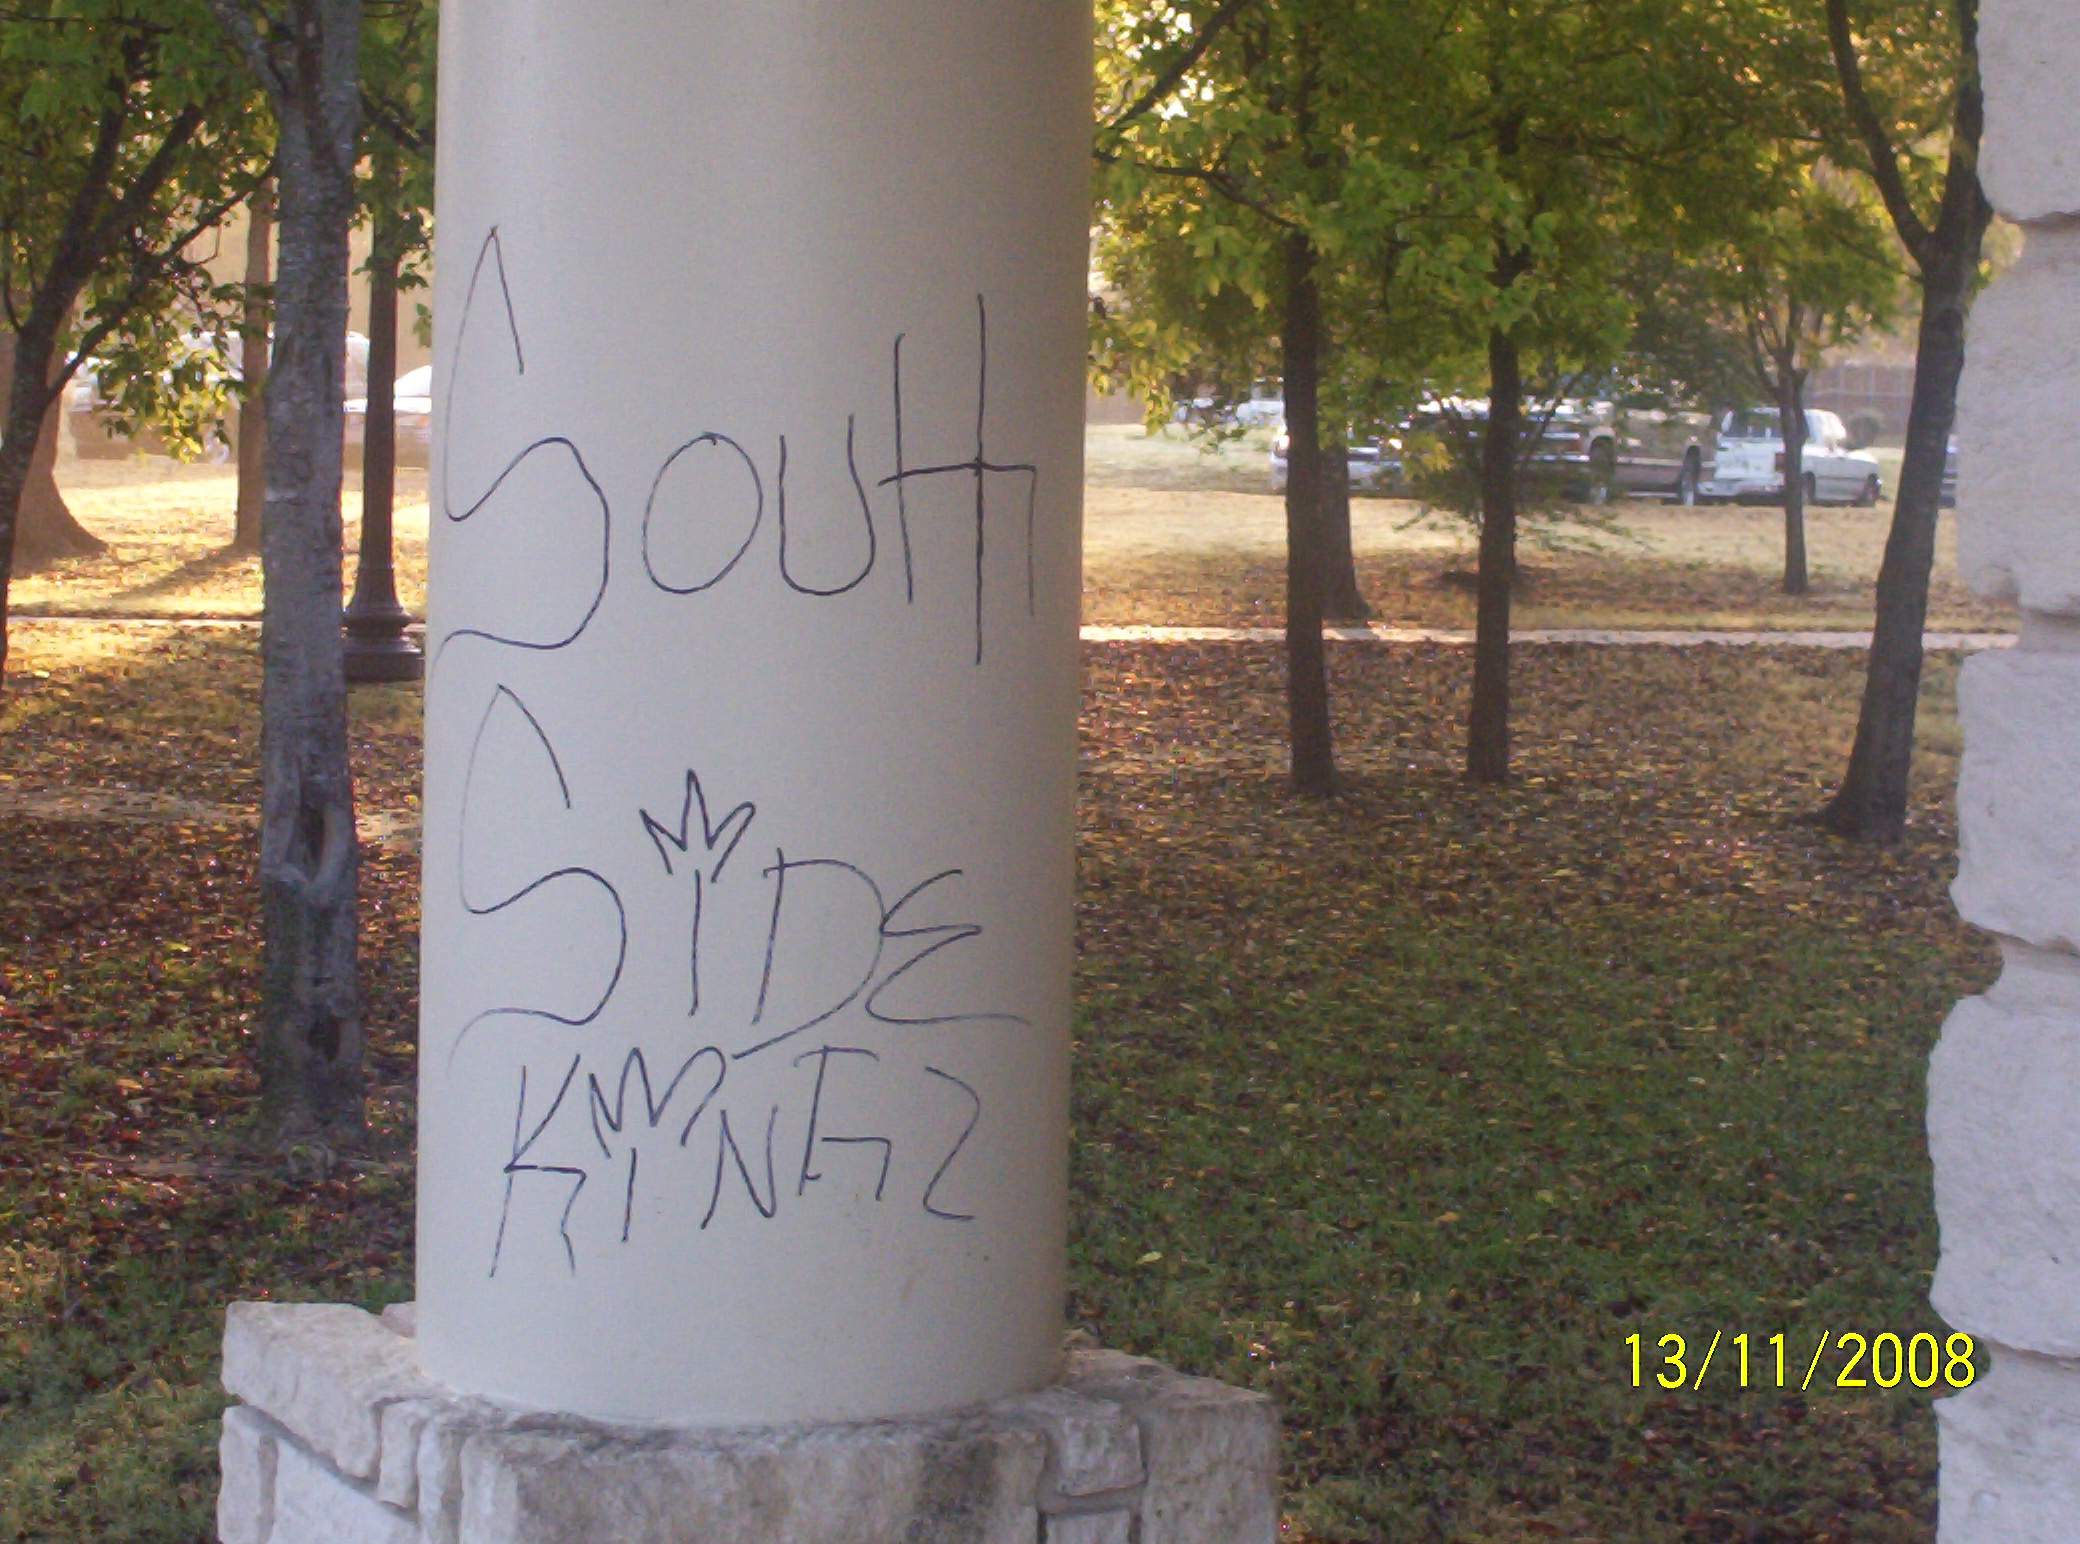 South Side Kings